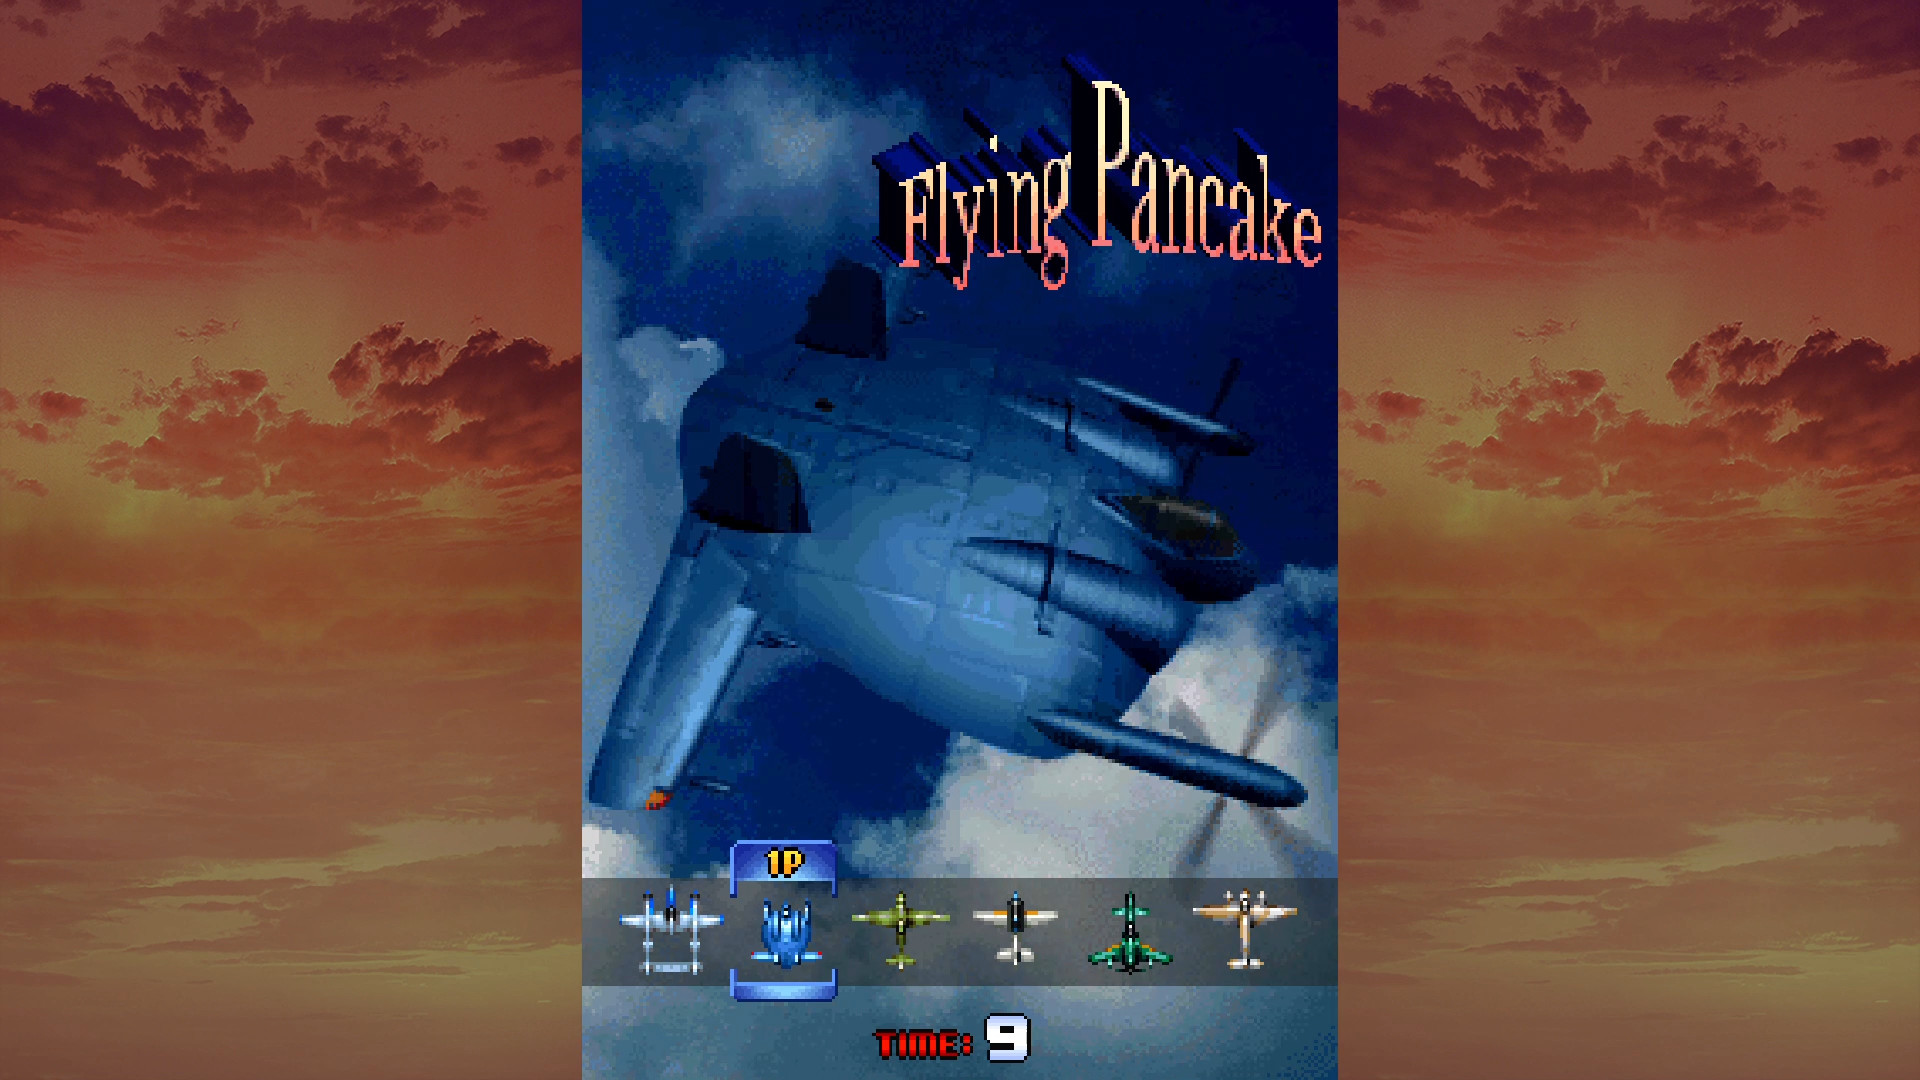 download air strikers 1945 3D pc